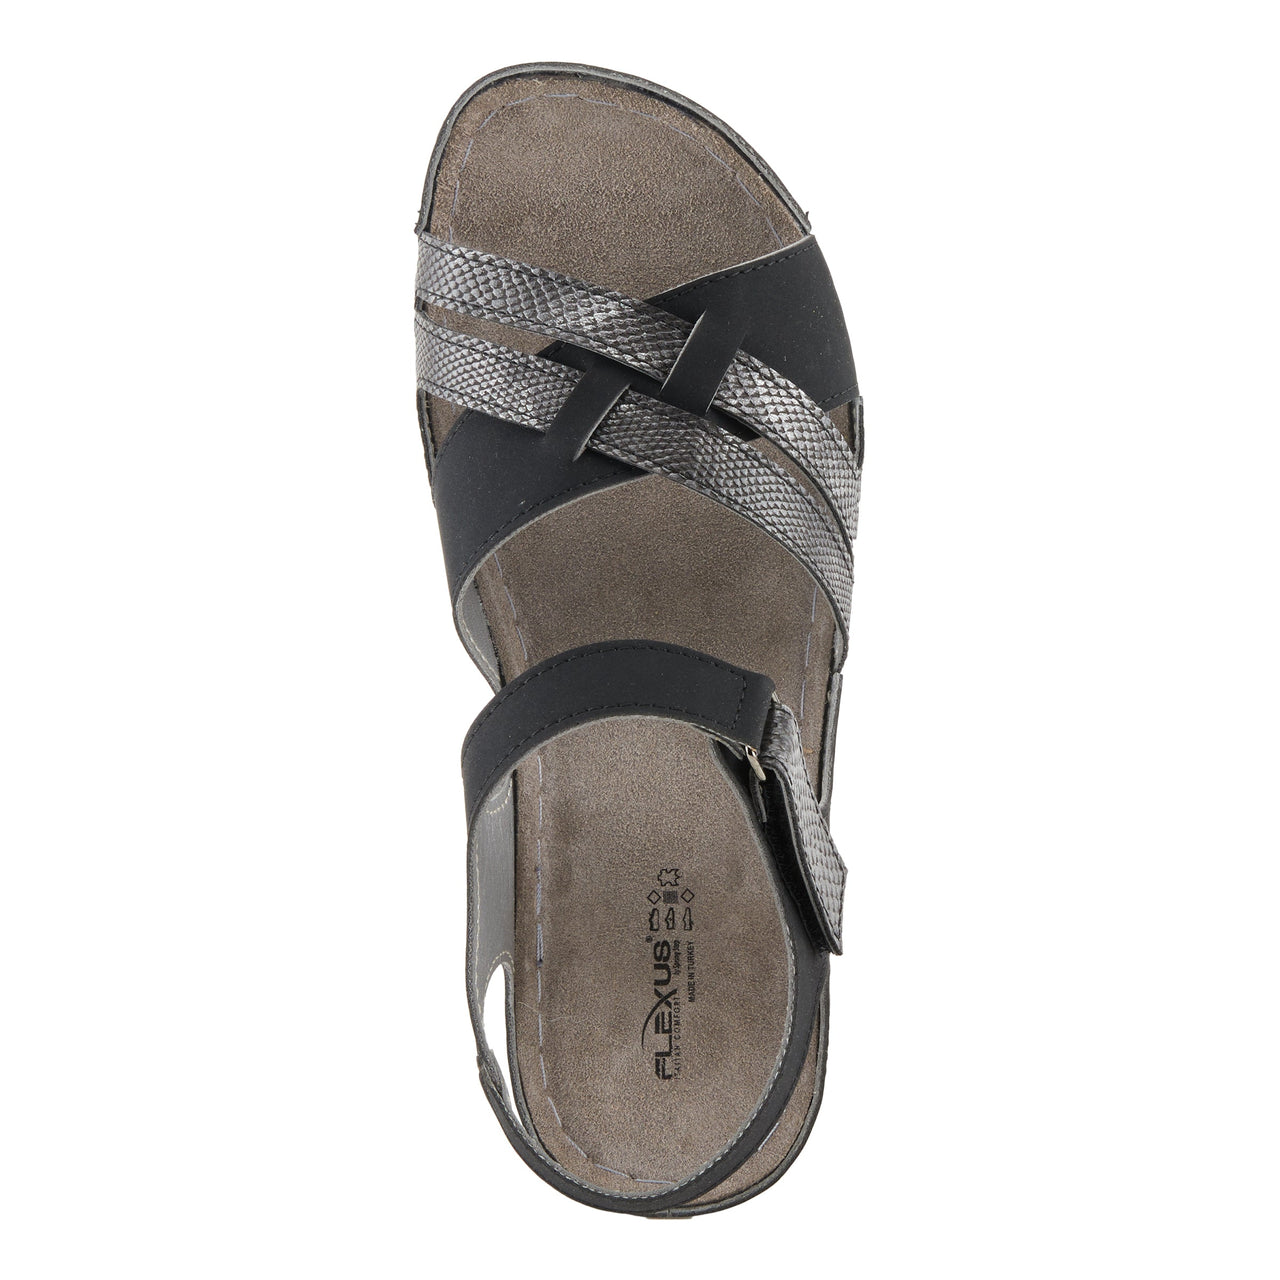 Spring Step Shoes Flexus Alvina Sandals - Side View in black color